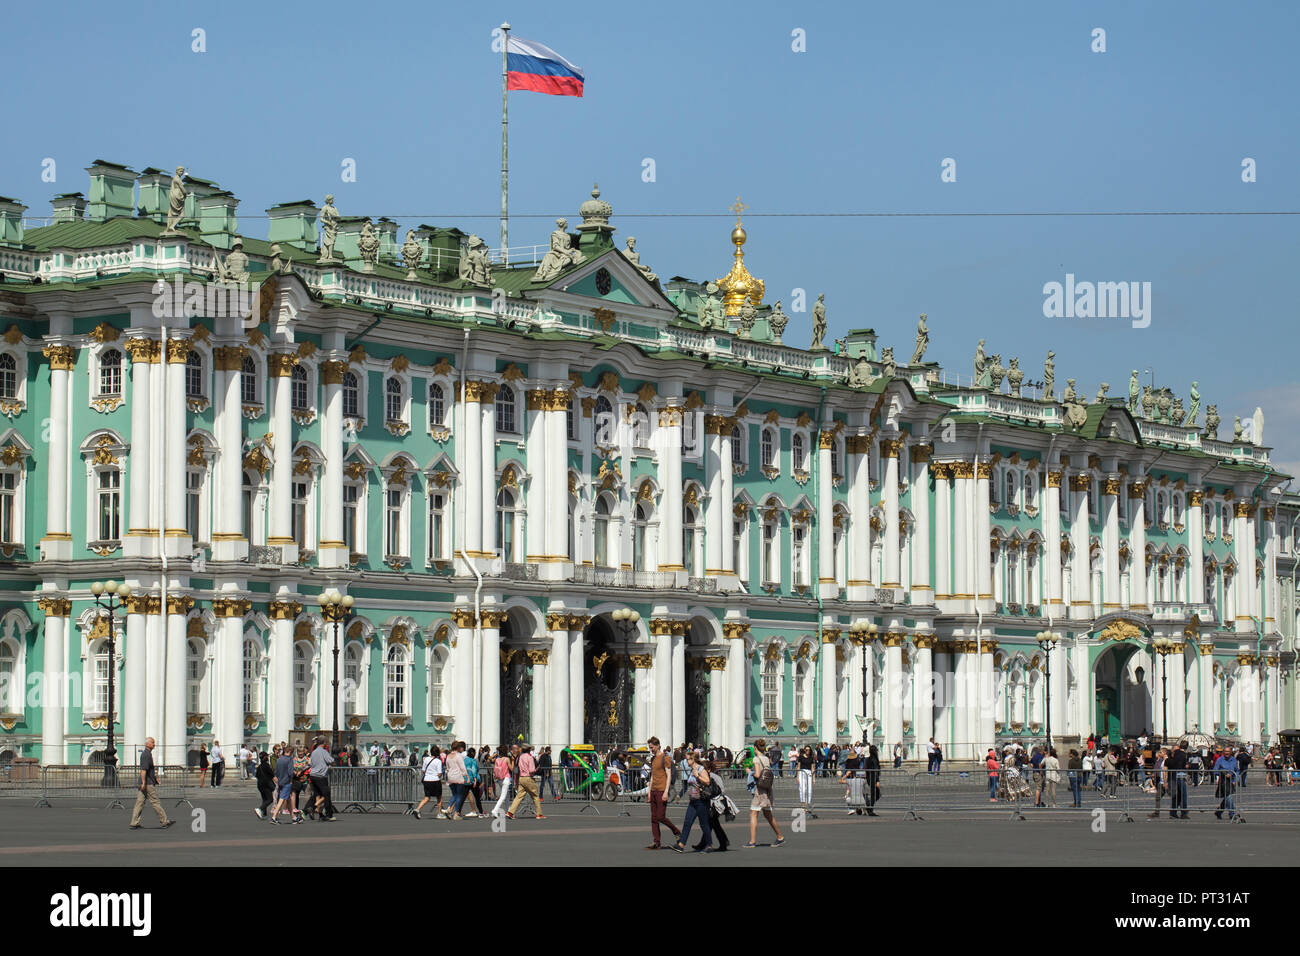 Winter Palace designed by Italian Baroque architect Bartolomeo Rastrelli on Palace Square in Saint Petersburg, Russia. Stock Photo